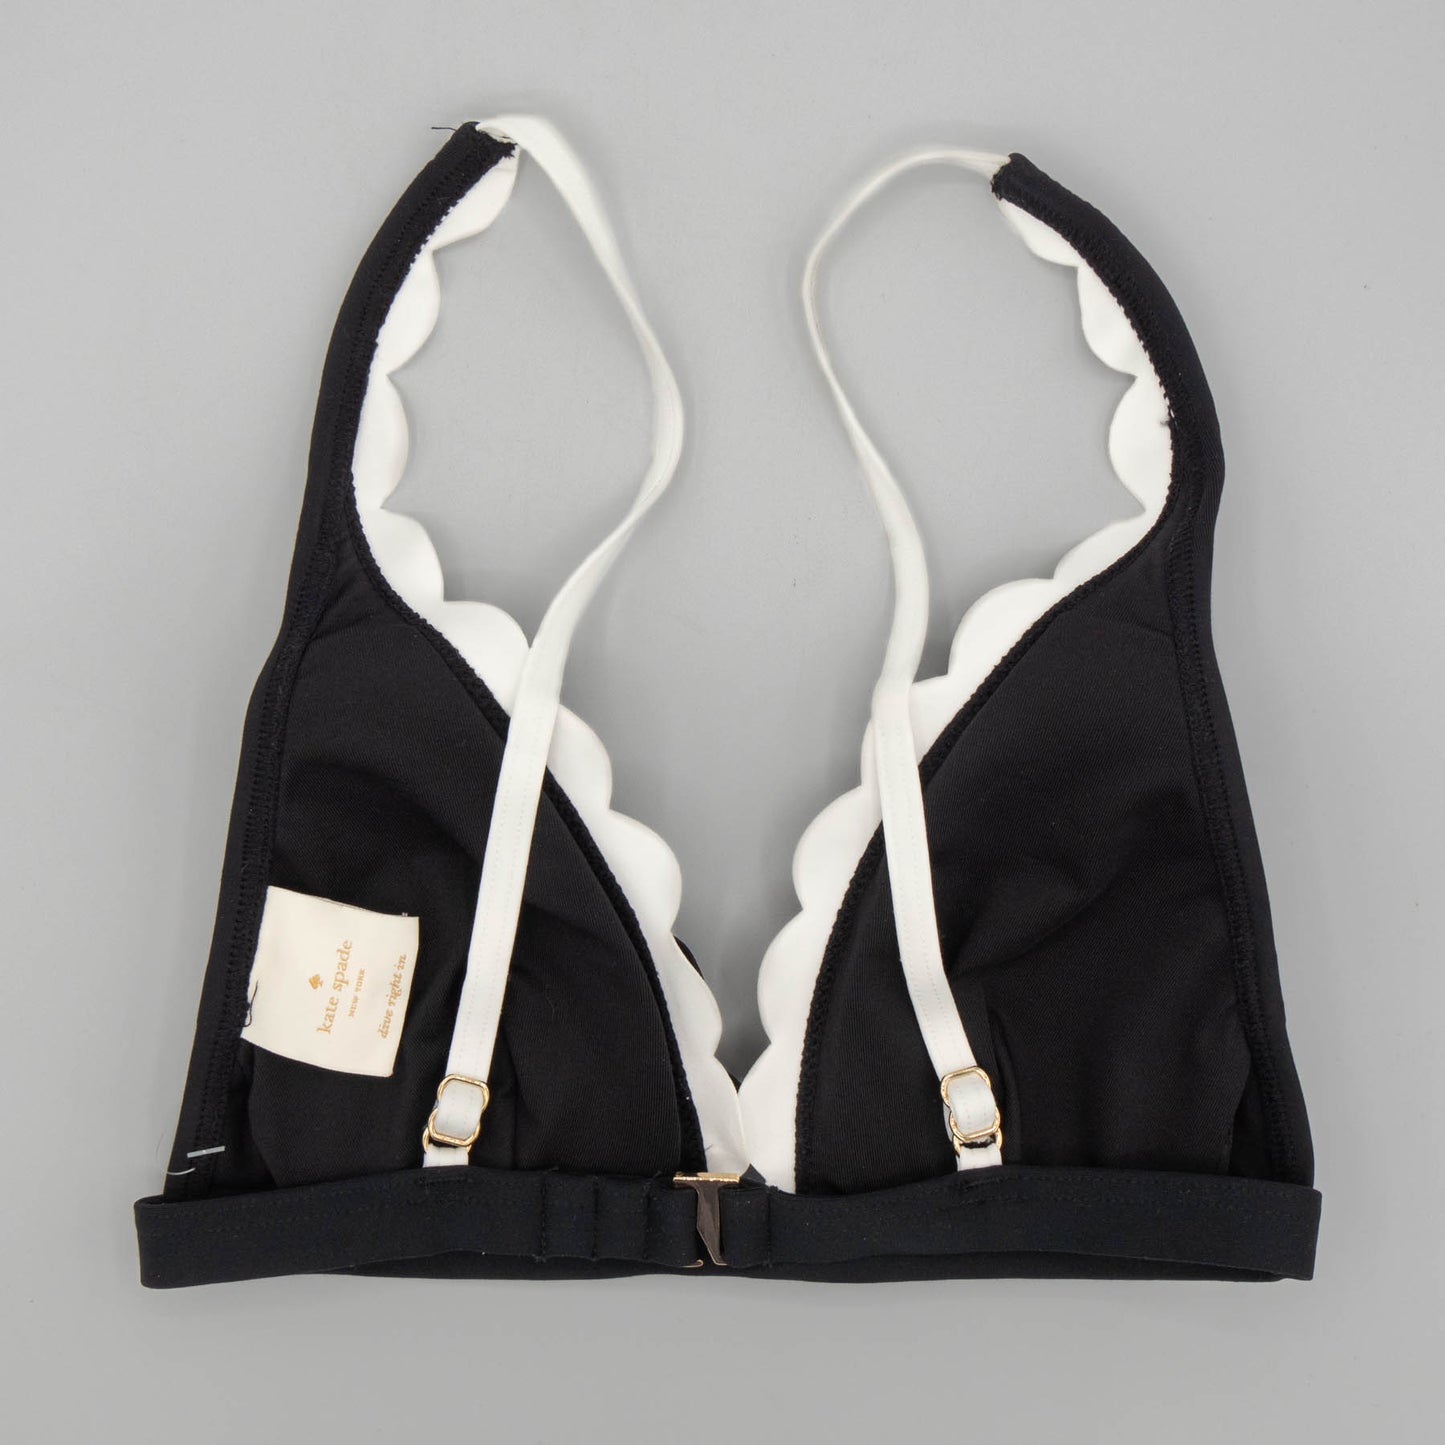 Kate Spade New York -  Cruse Swimwear Tops - Black